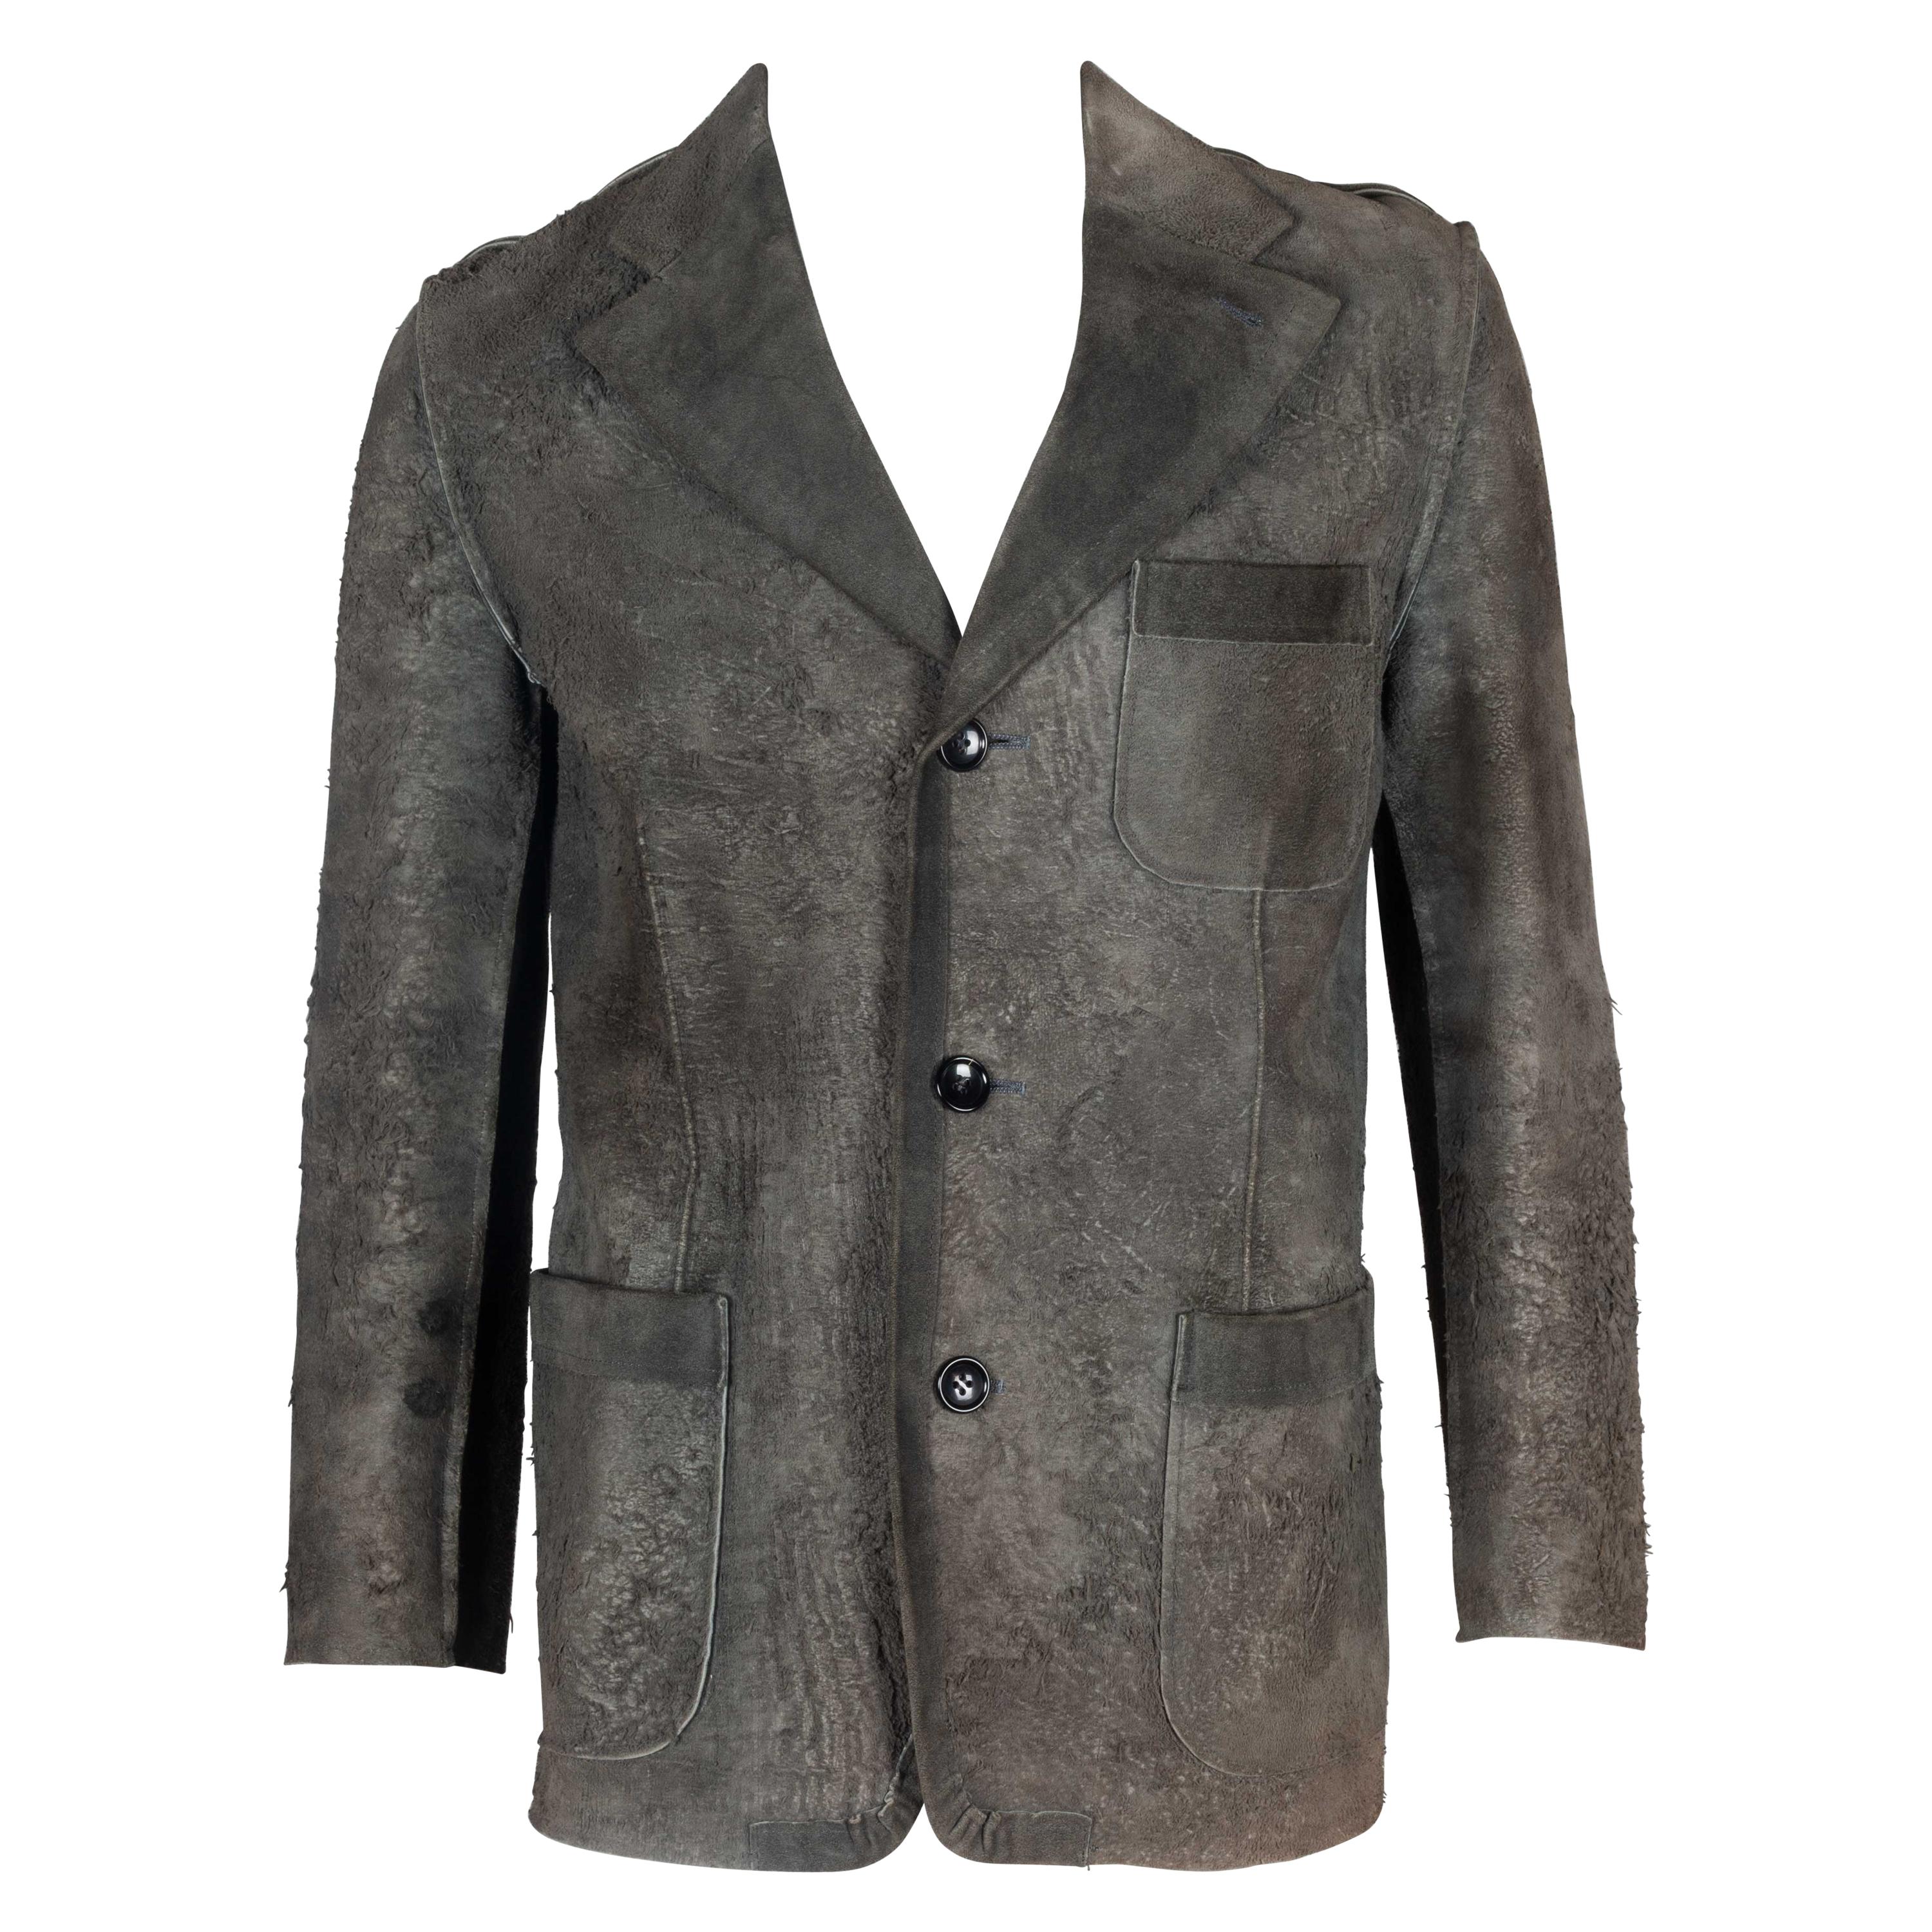 omme des Garçons Distressed Leather Single-Breasted Jacket, 2002